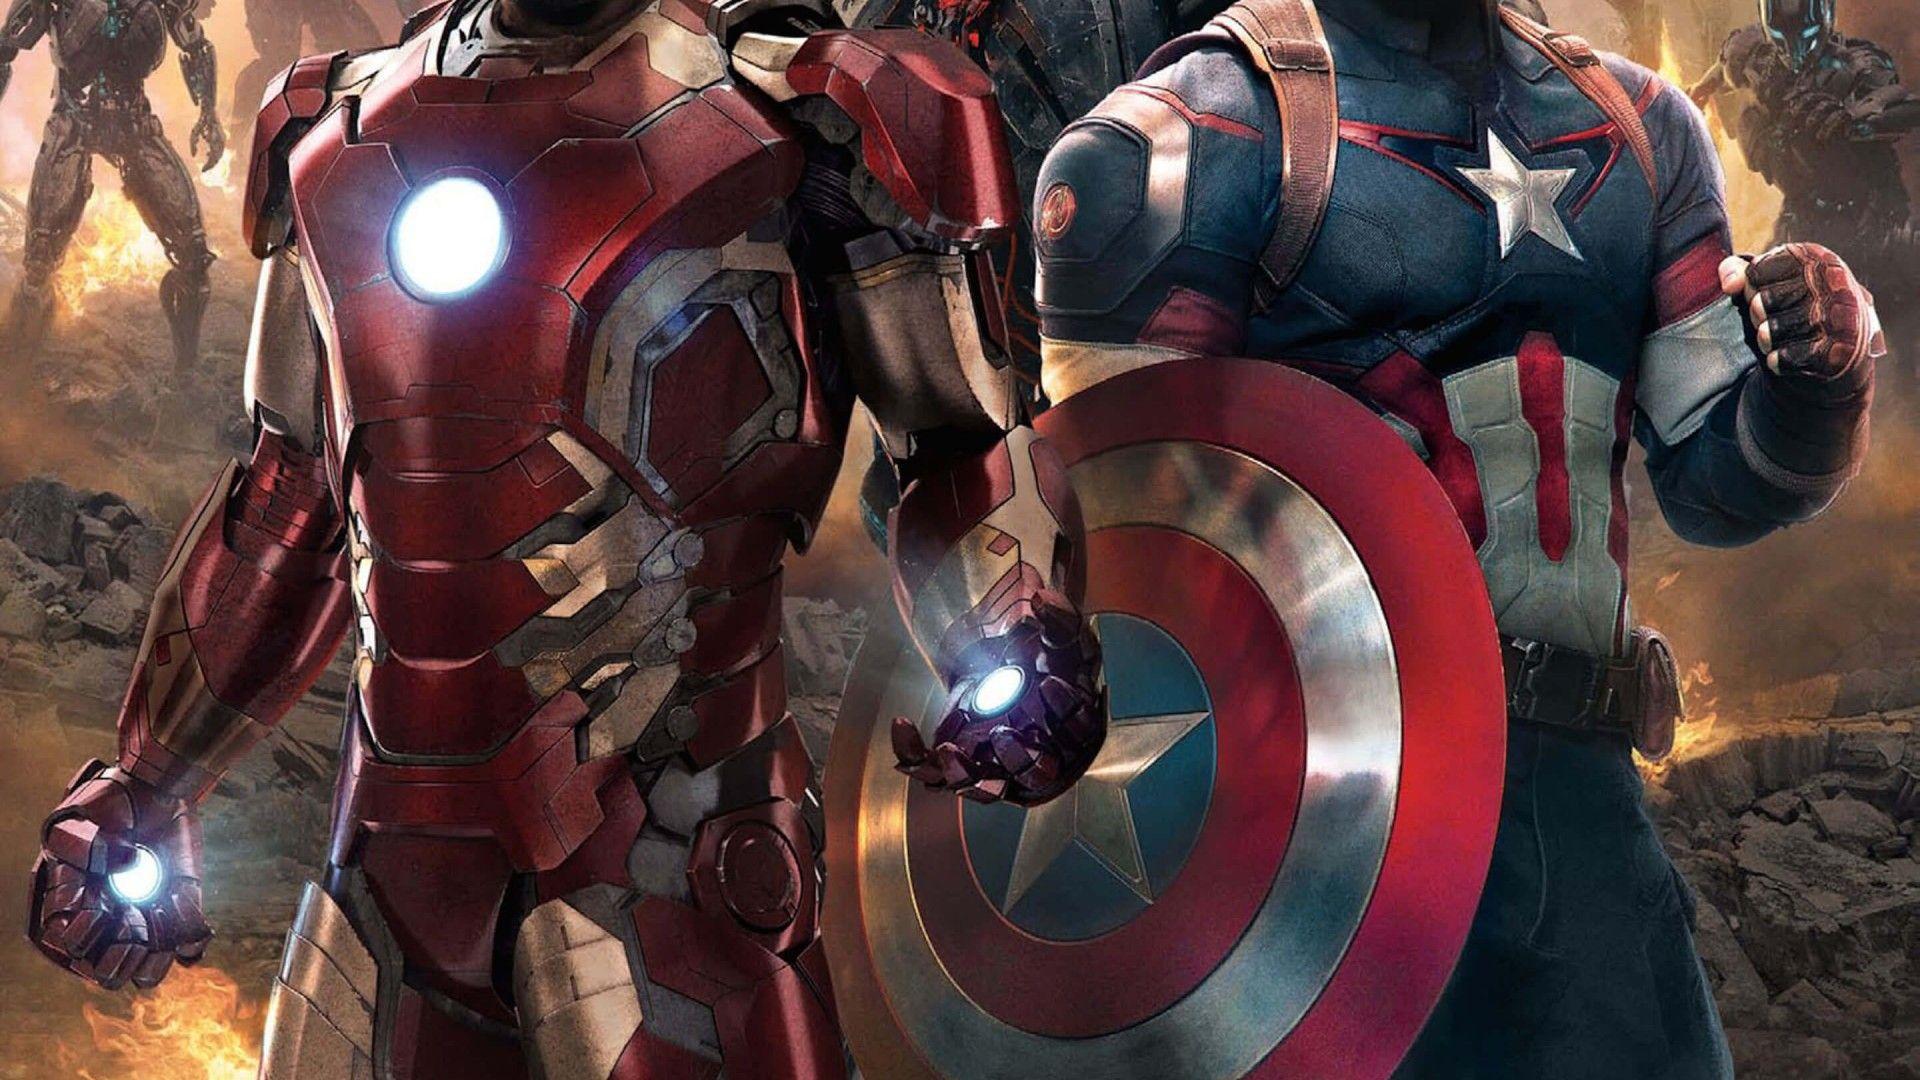 Captain America Vs Iron Man Wallpapers - Wallpaper Cave